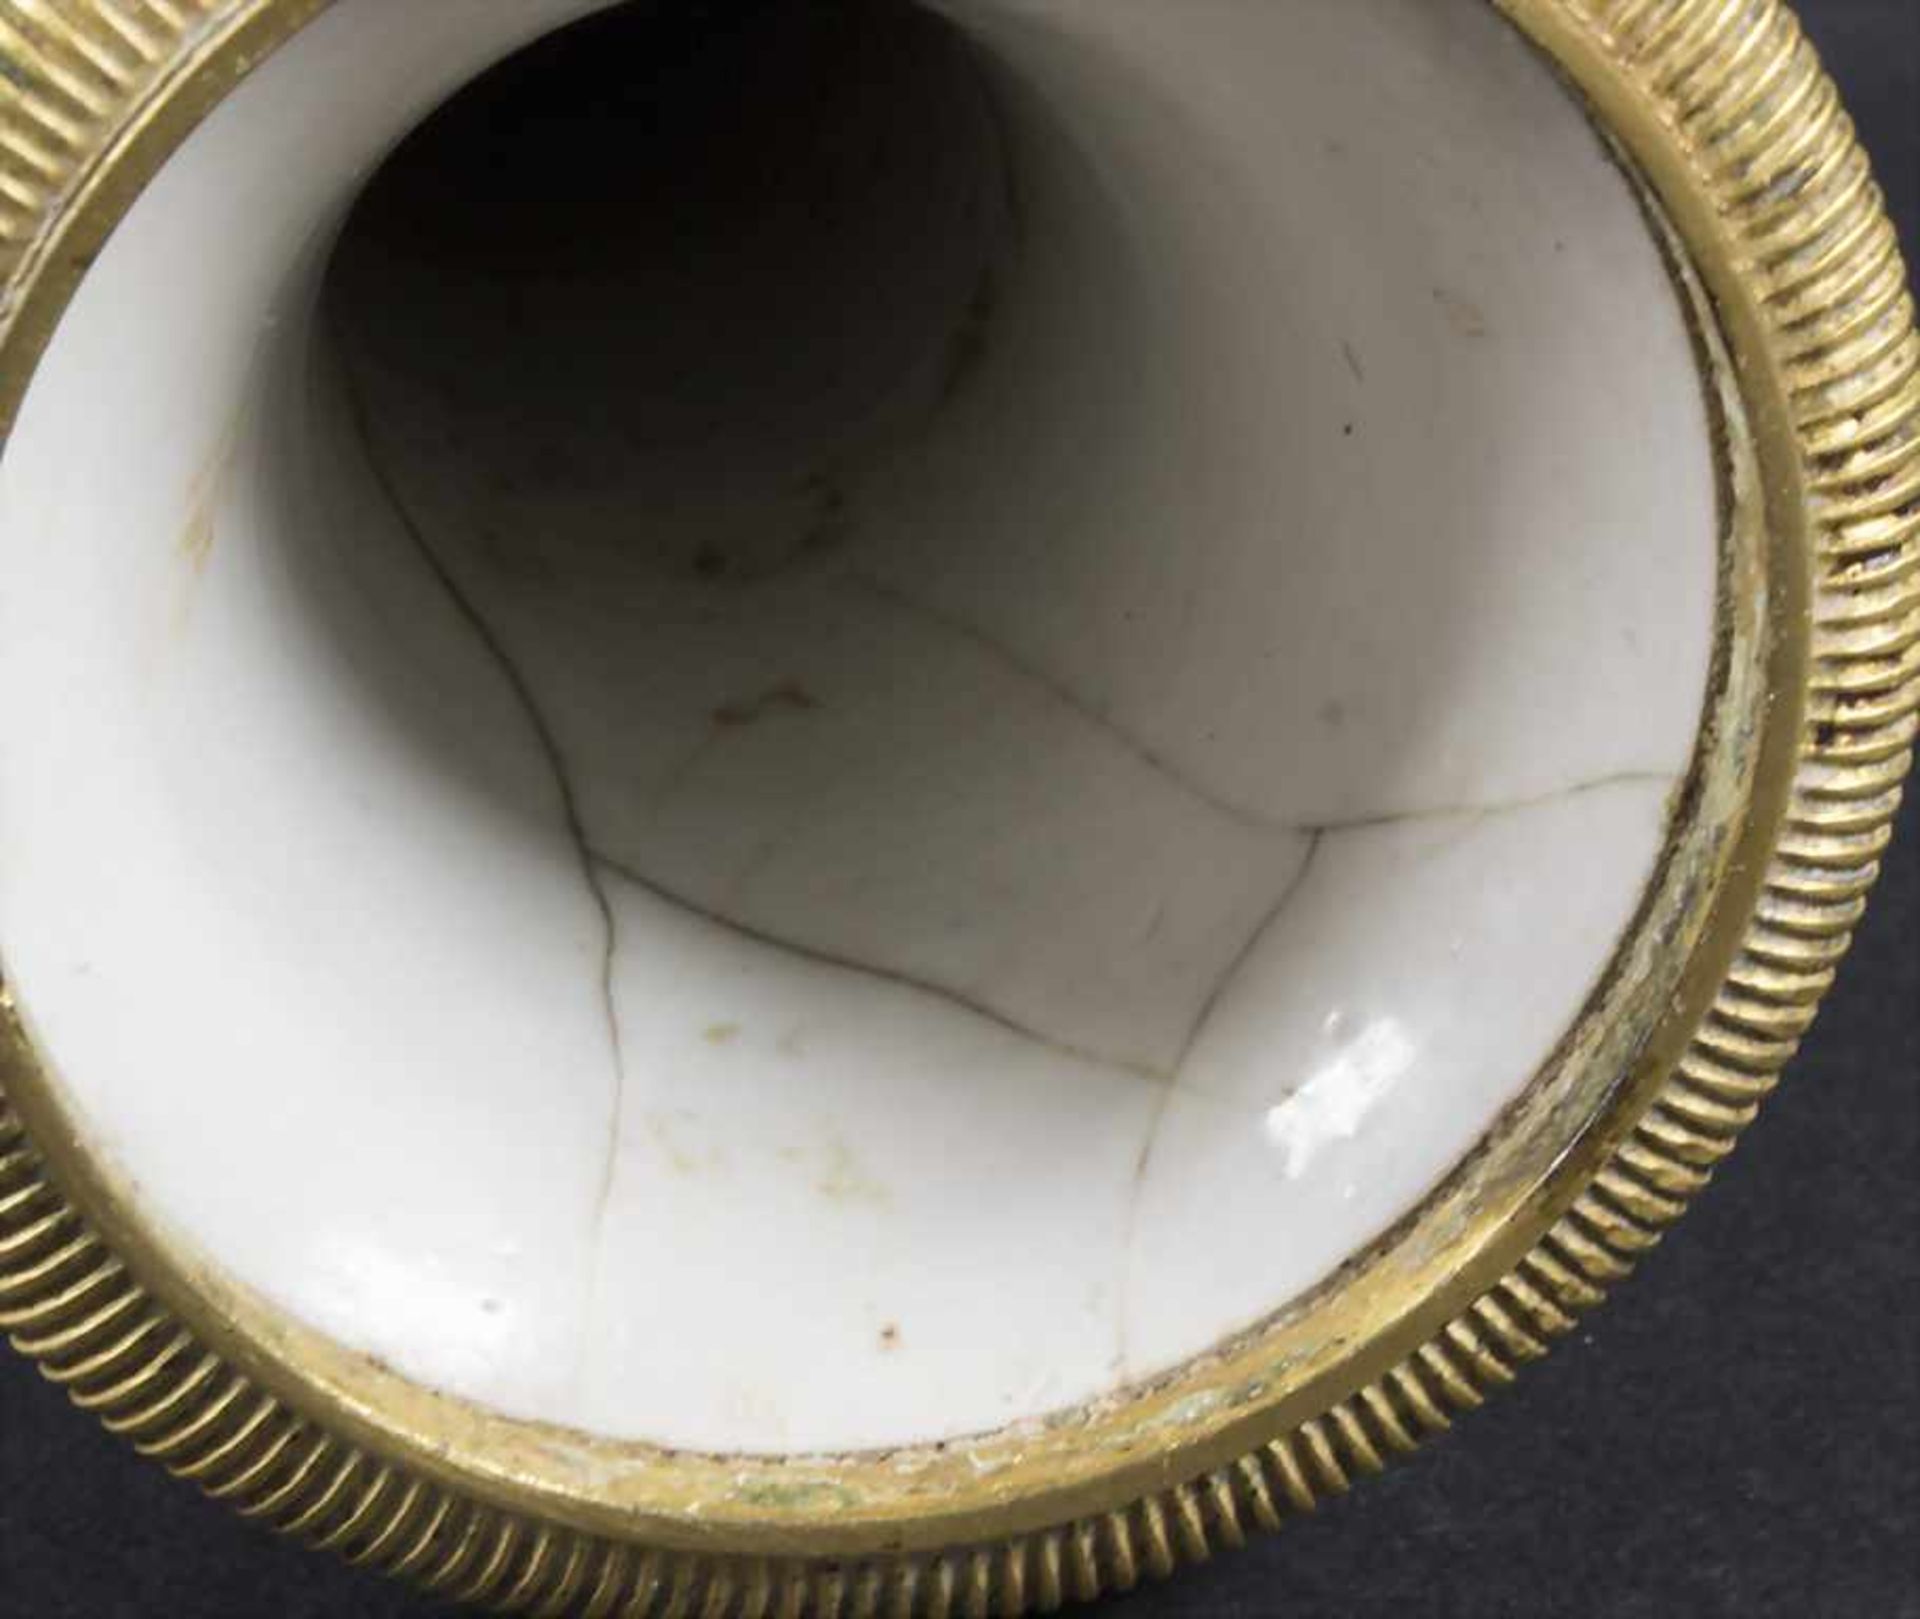 Ziervase / A decorative porcelain vase, China, Qing Dynastie (1644-1911), 18. Jh. - Image 9 of 9